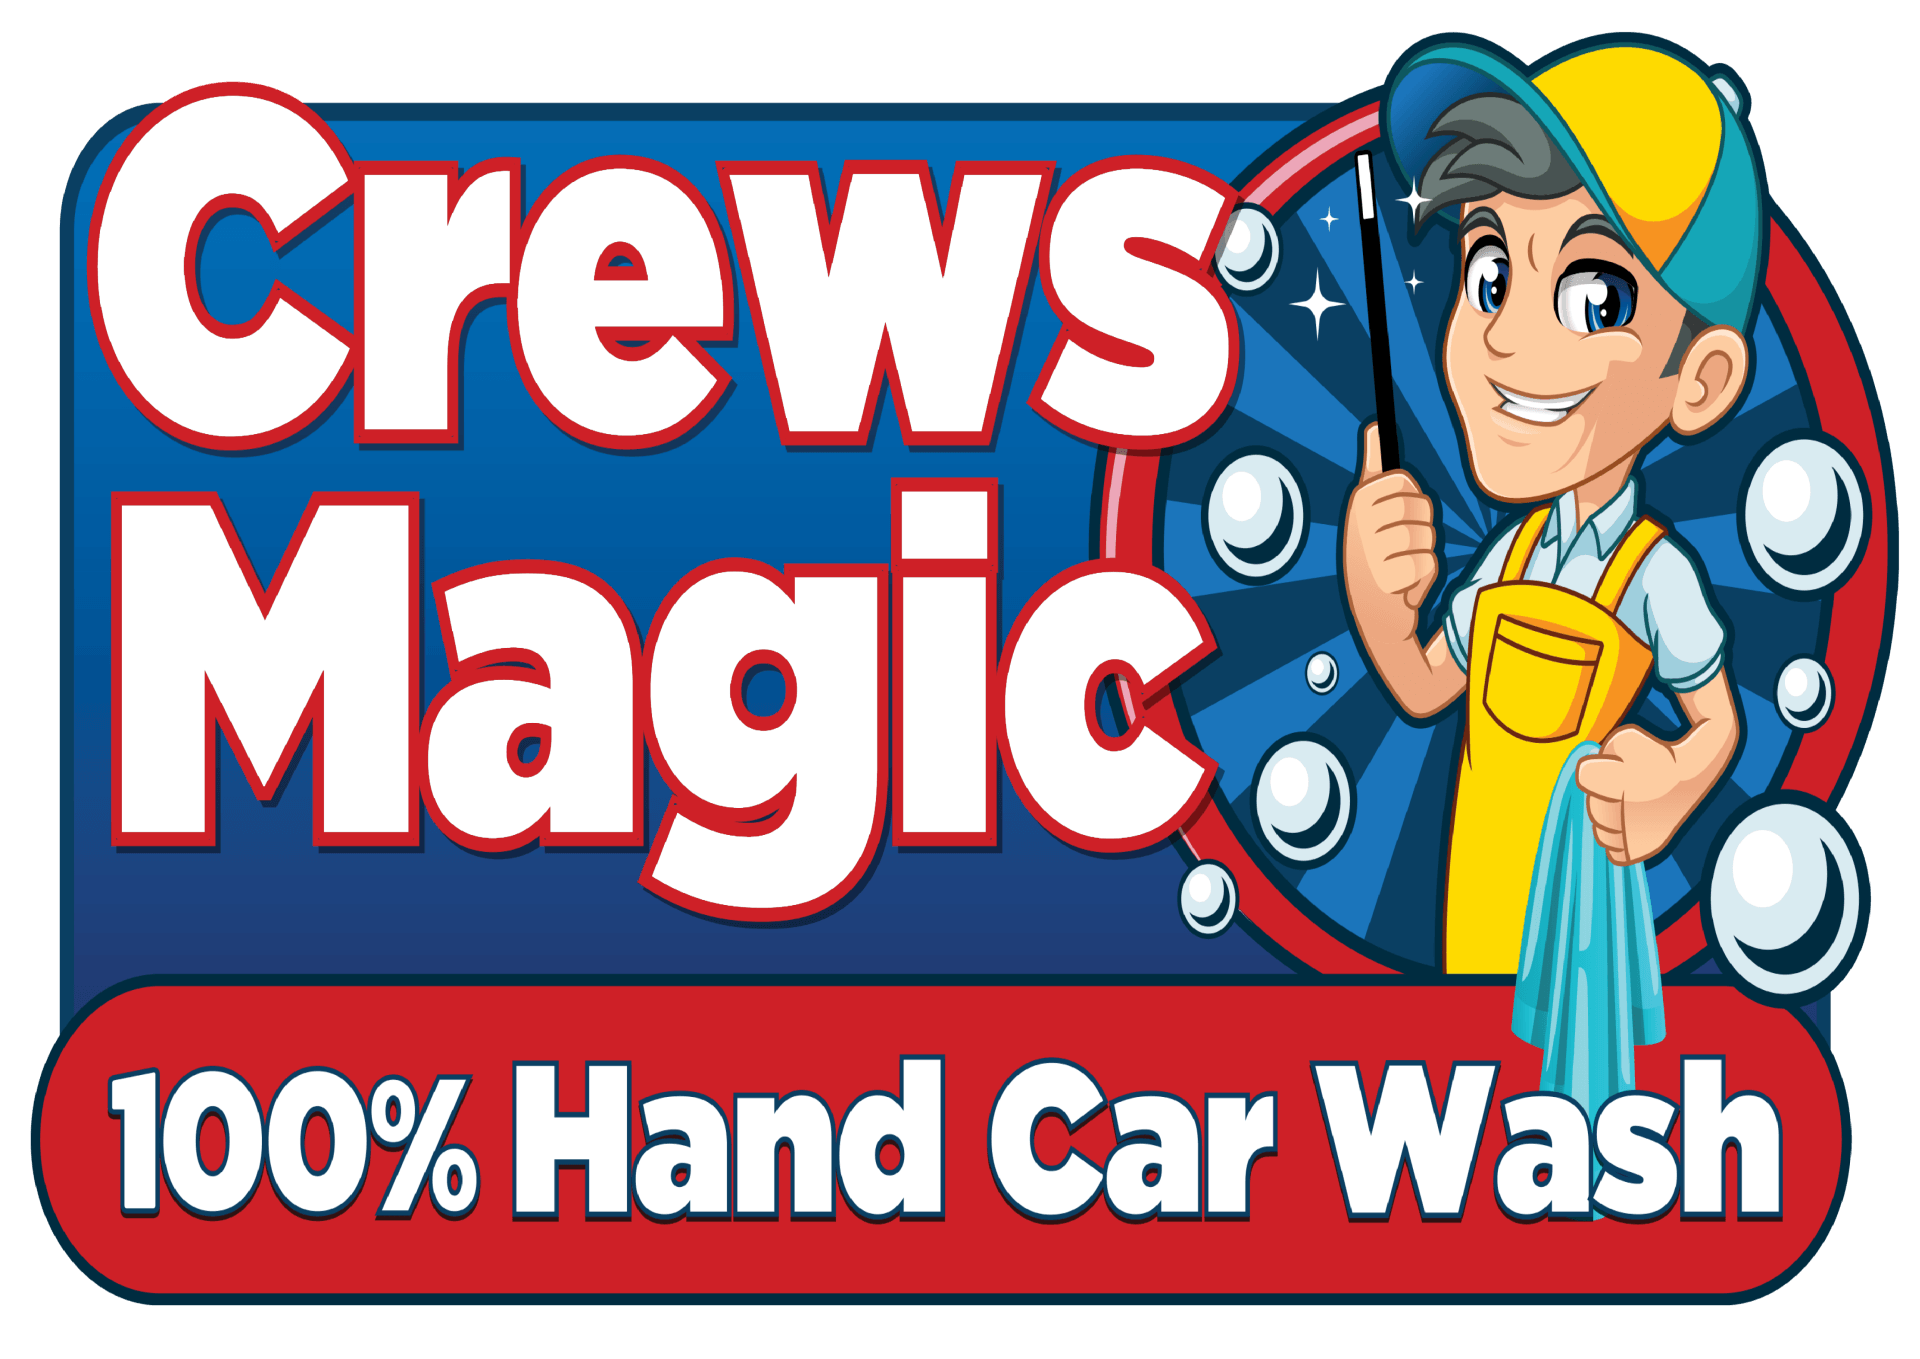 crews magic hand car wash logo